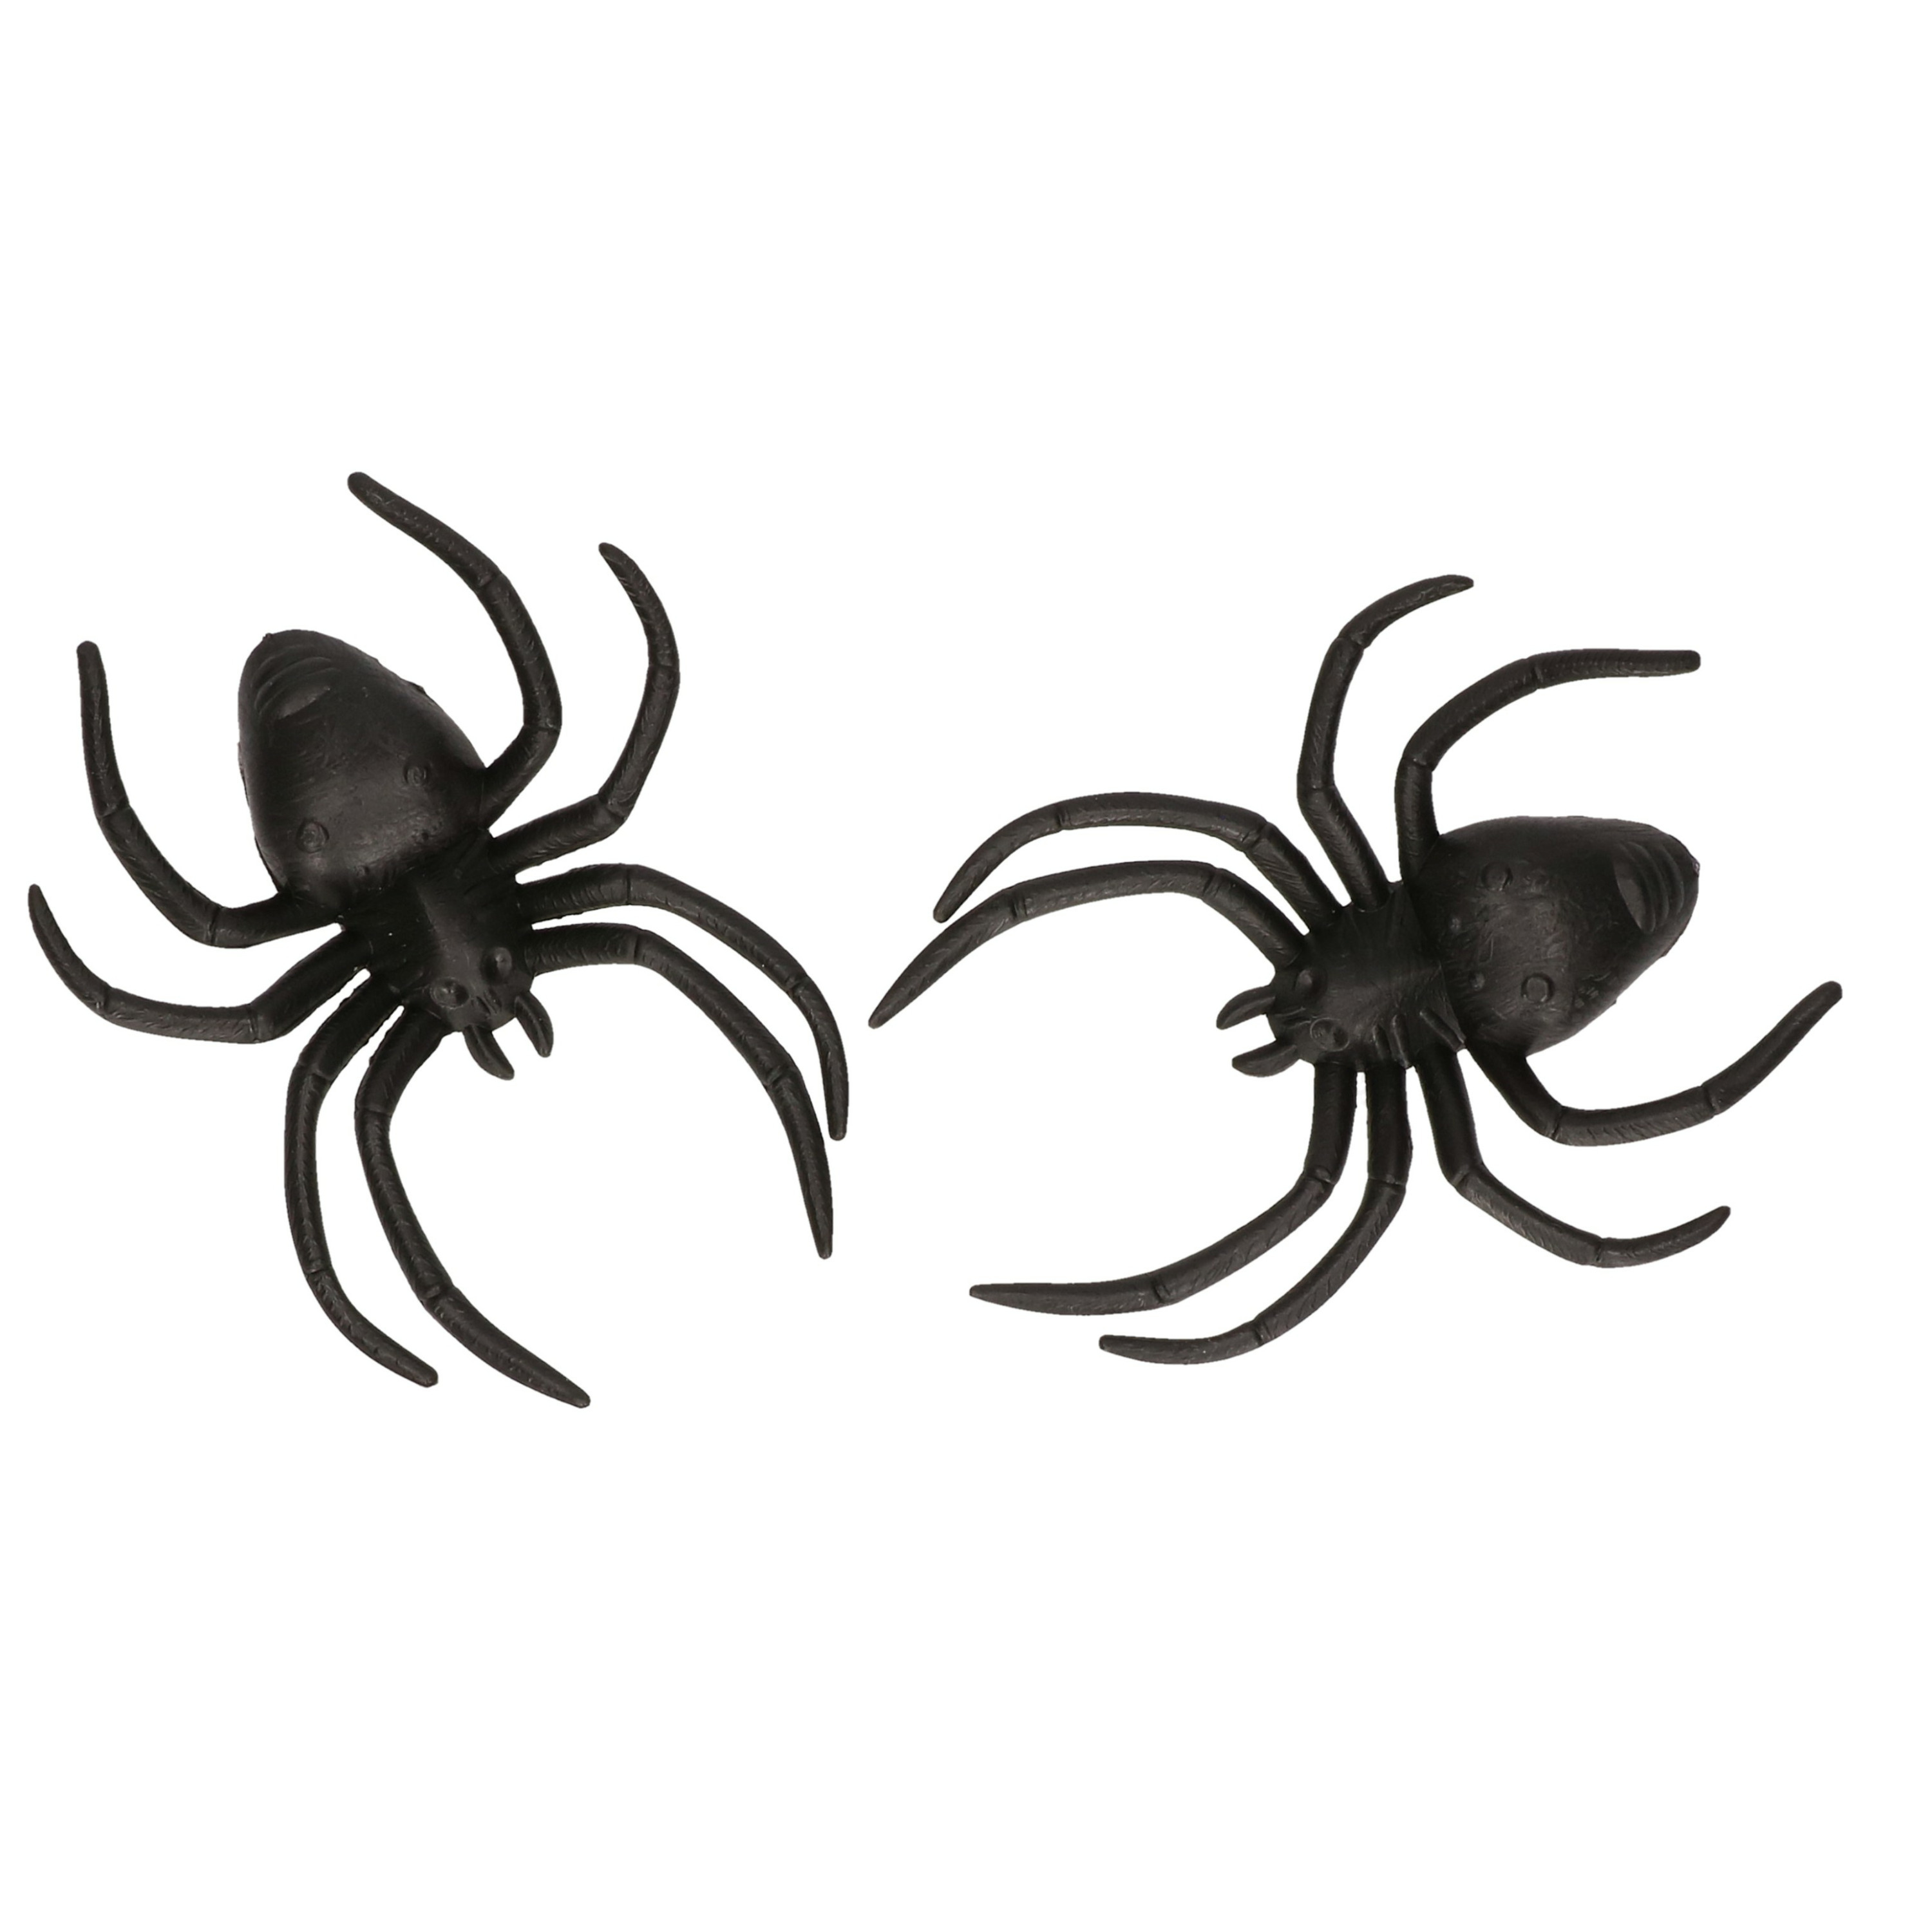 Nep spinnen spinnetjes 12 cm zwart 2x stuks Horror griezel thema decoratie beestjes